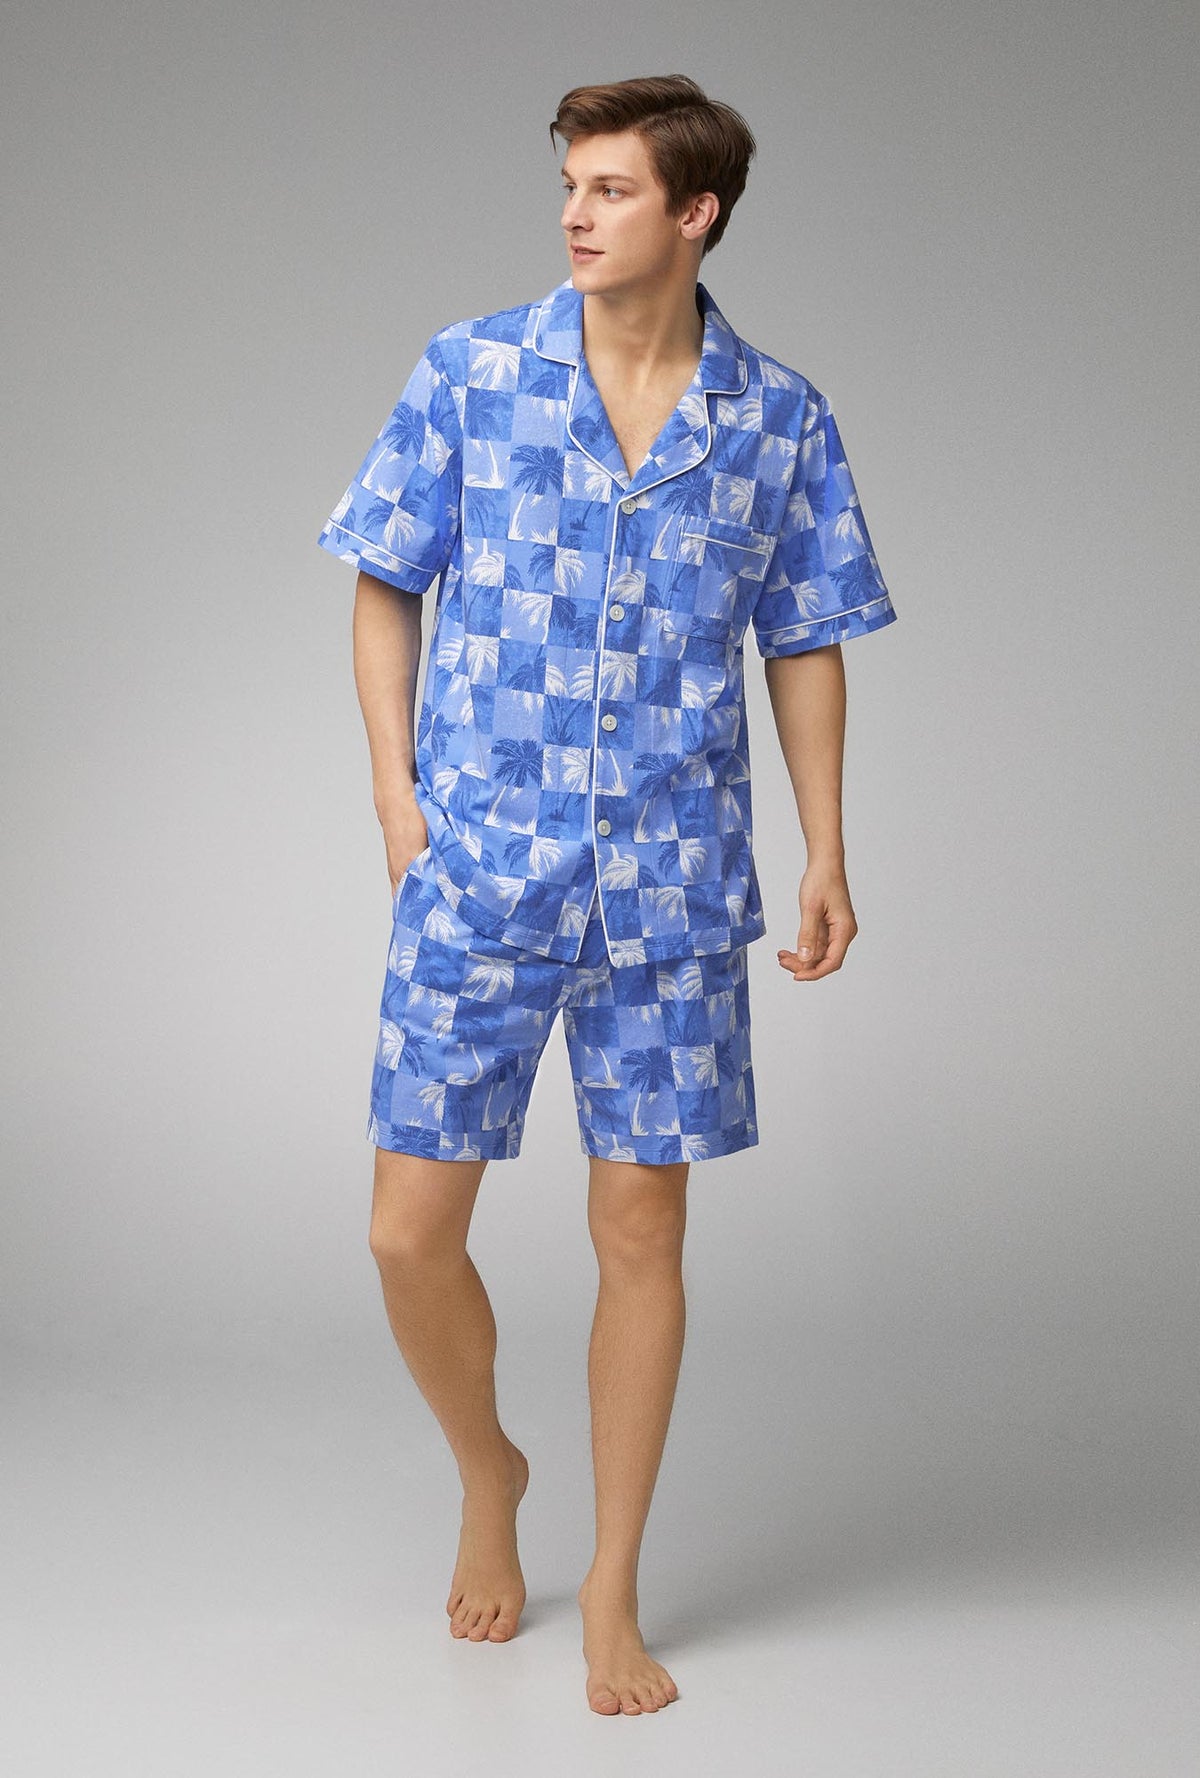 A man wearing blue short sleeve notch stretch jersey short pj set with cool palms print.